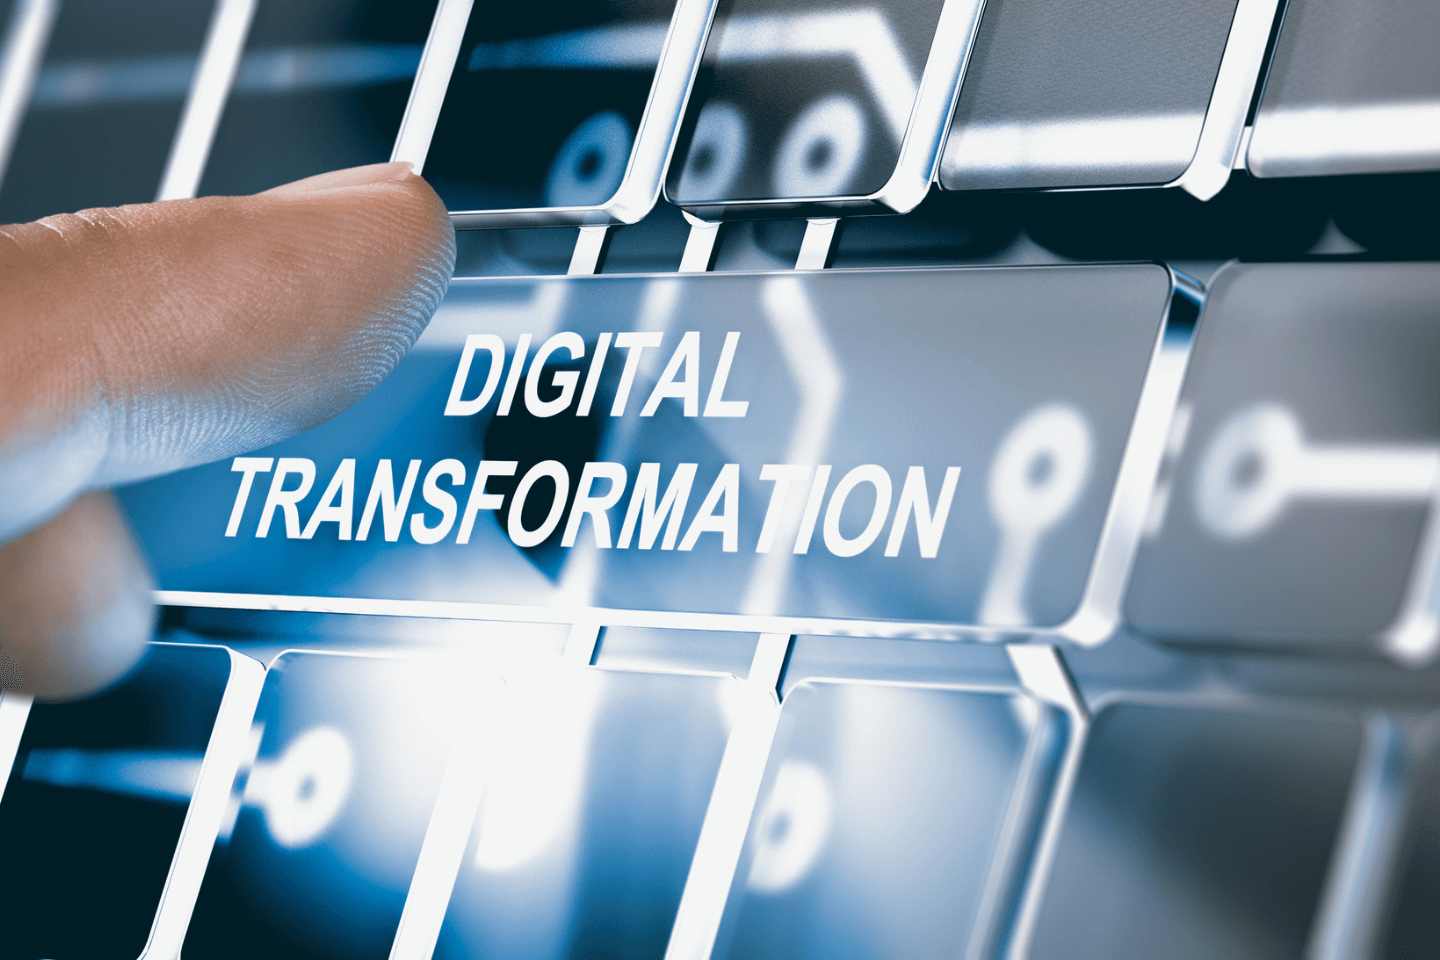 Start up and Digital Transformation